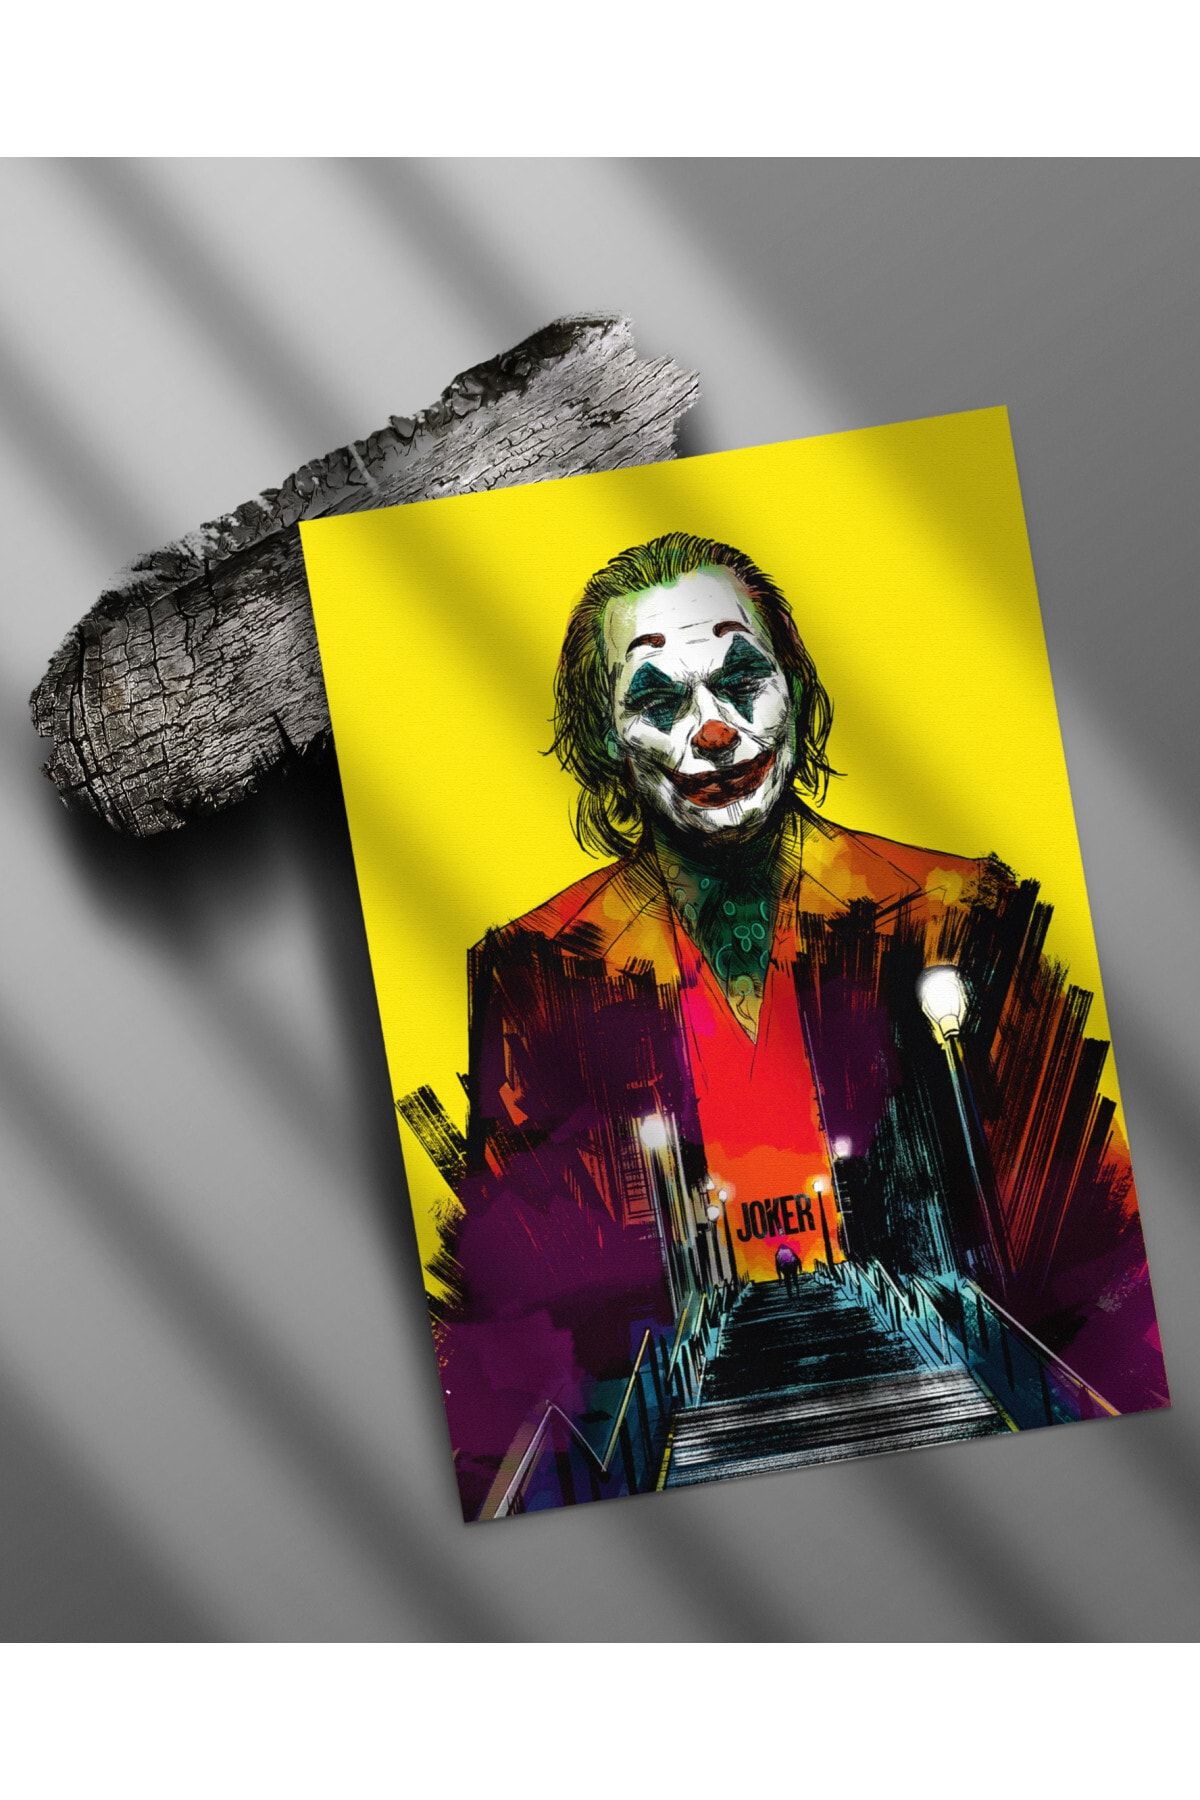 Denizposter Joker, Film Afişleri, Film Posteri, Film Kapak, Küçük Poster, Genç Odası Poster, Oda Poster 35x50